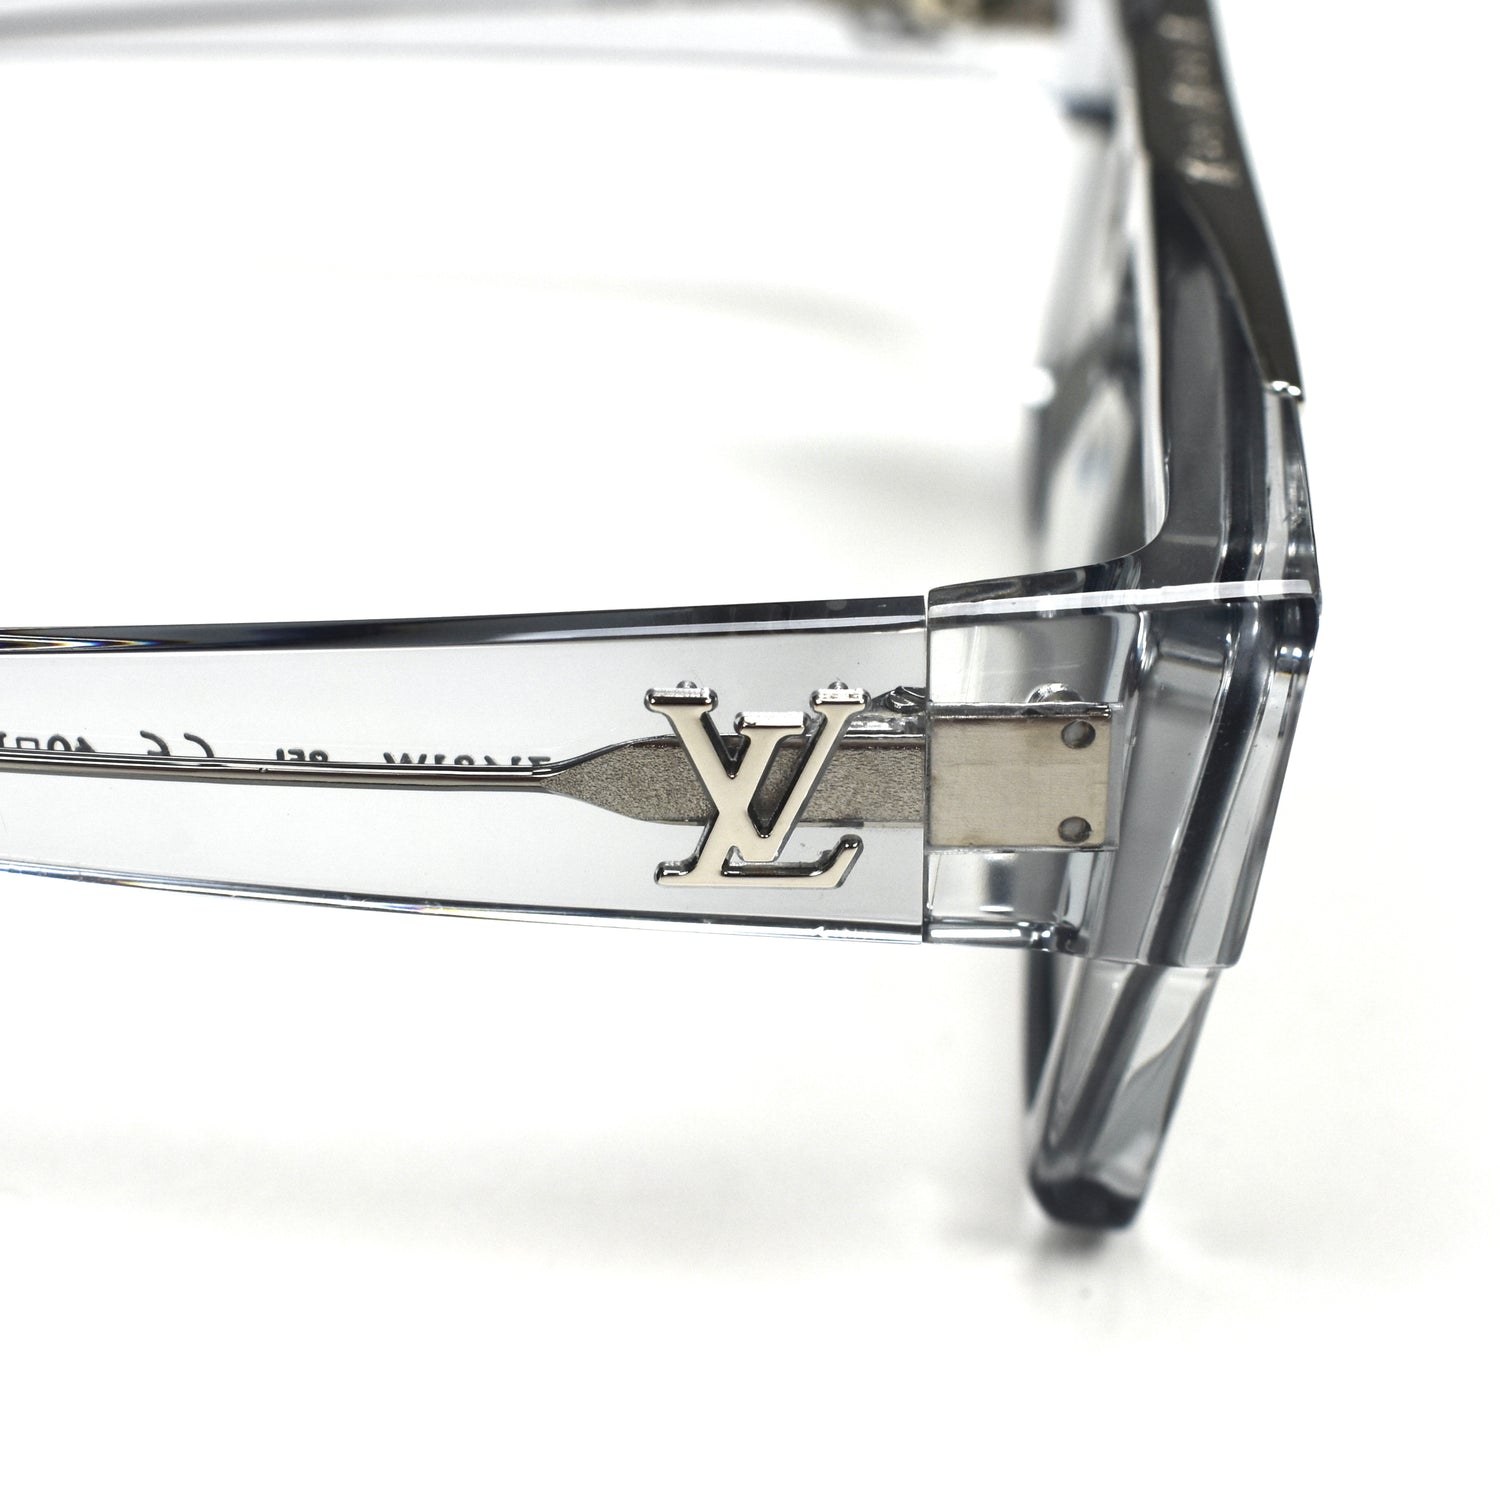 Louis Vuitton 1.1 Evidence Sunglasses Multicolored Acetate & Metal. Size E